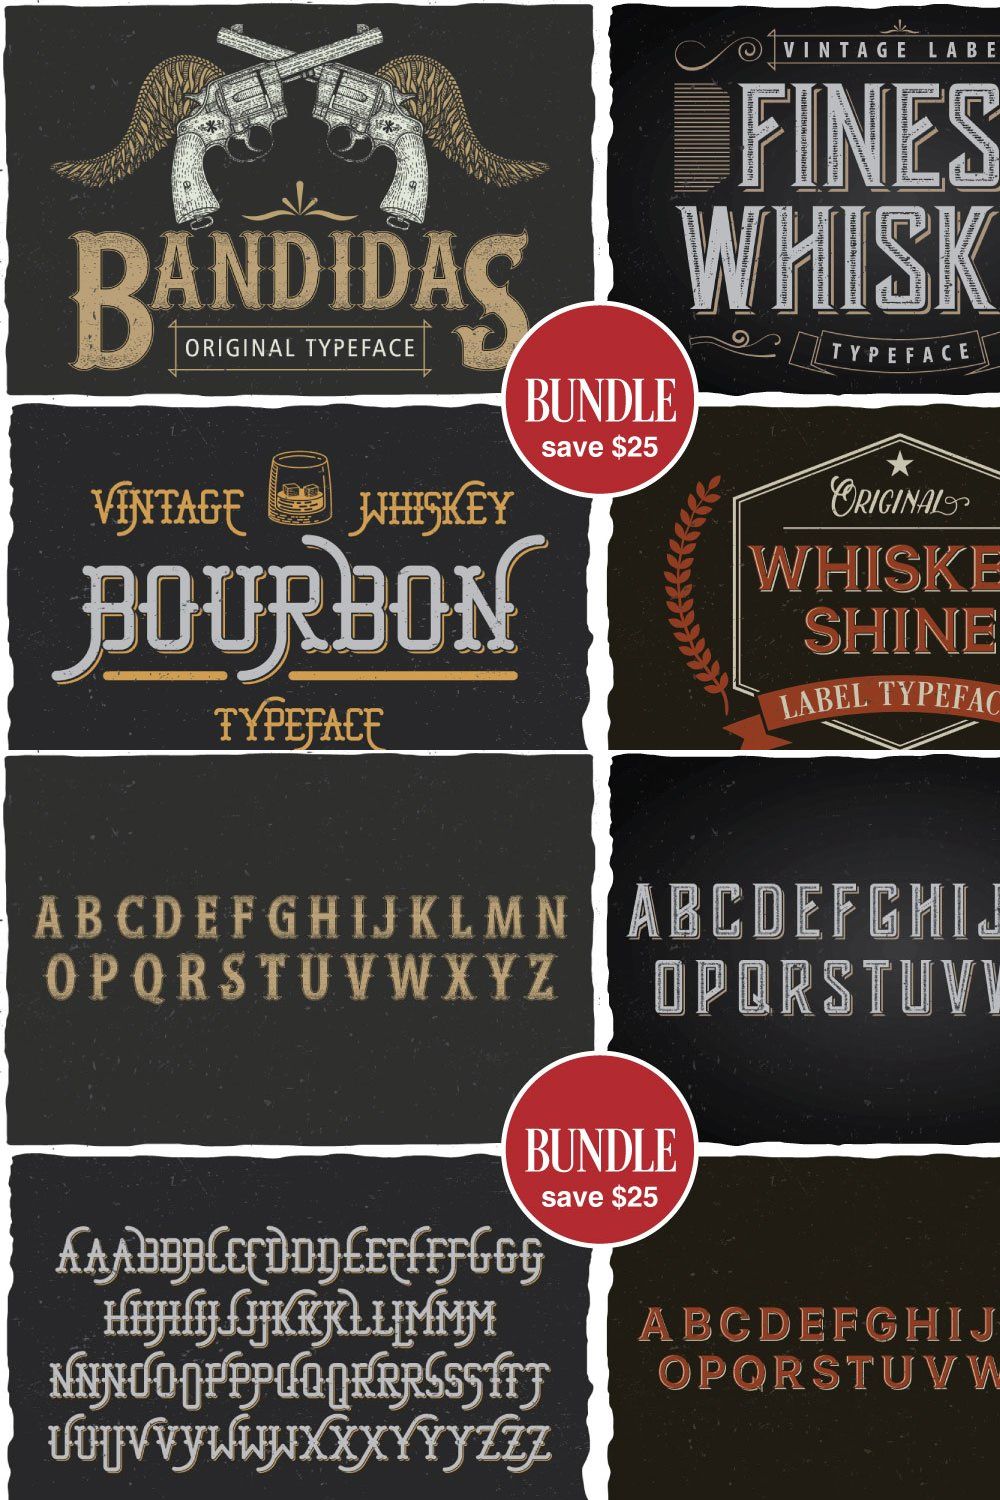 Whiskey Theme Bundle pinterest preview image.